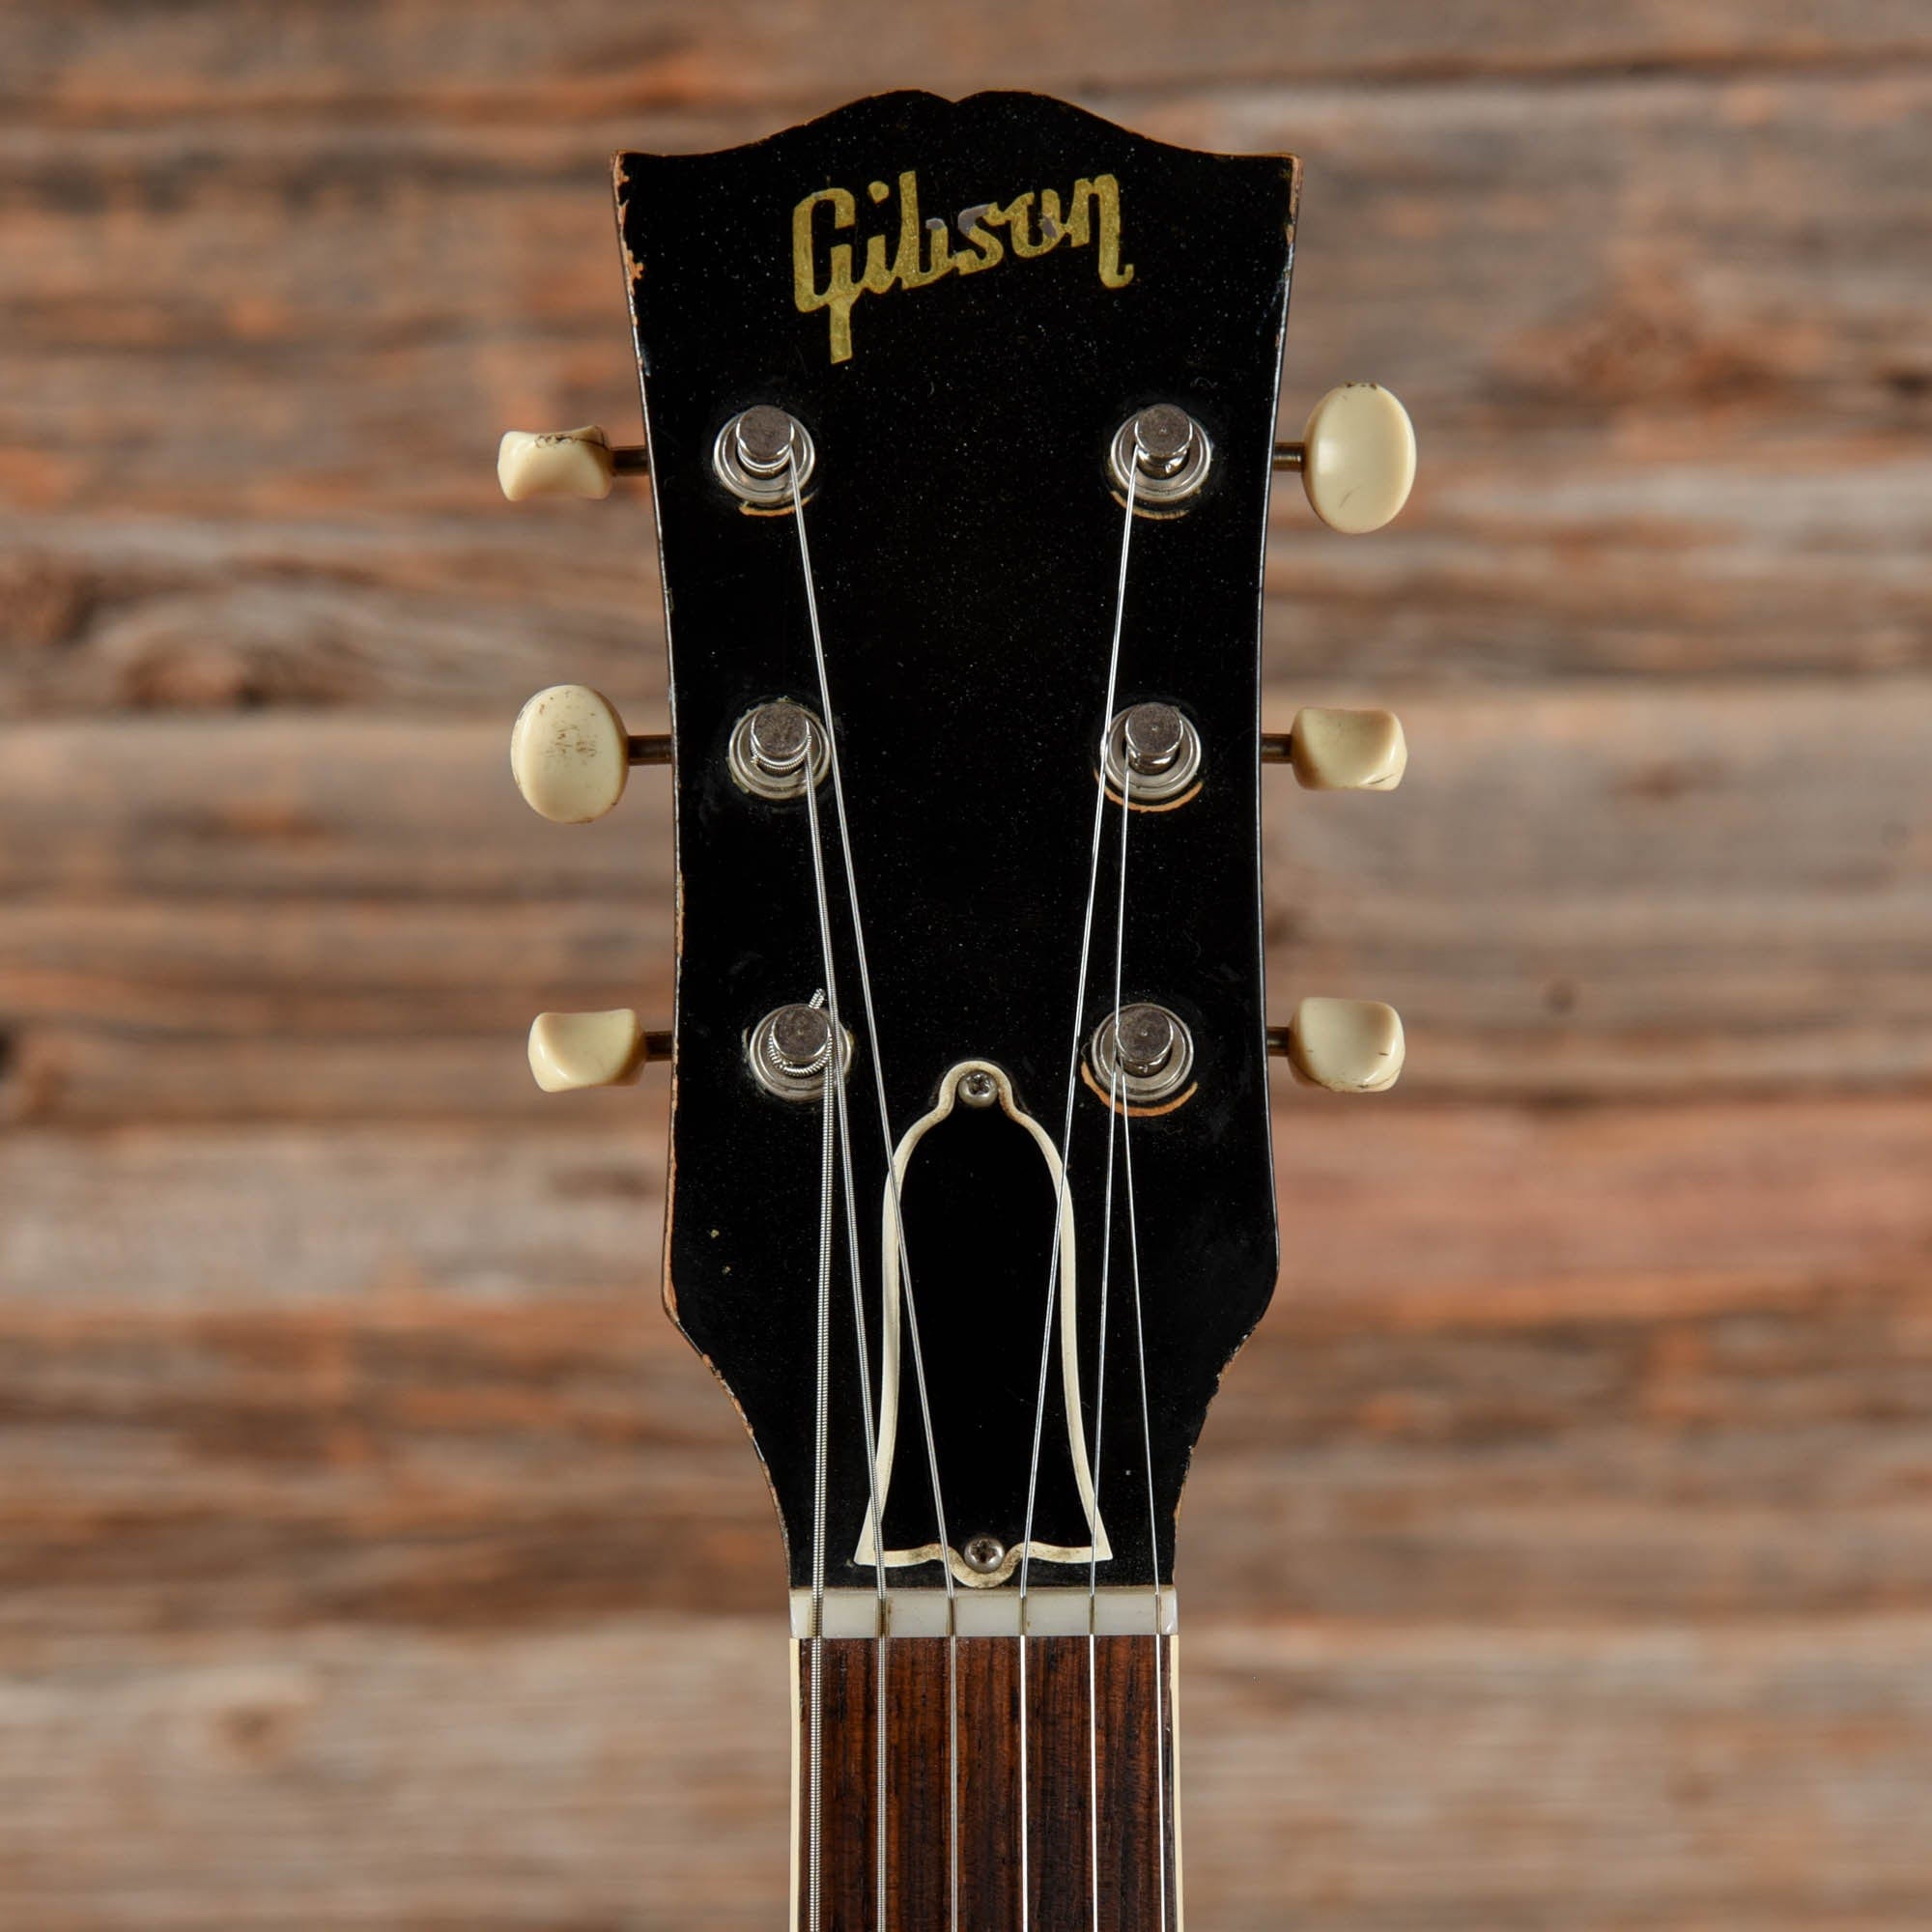 Gibson ES-330 Sunburst 1963 Electric Guitars / Hollow Body